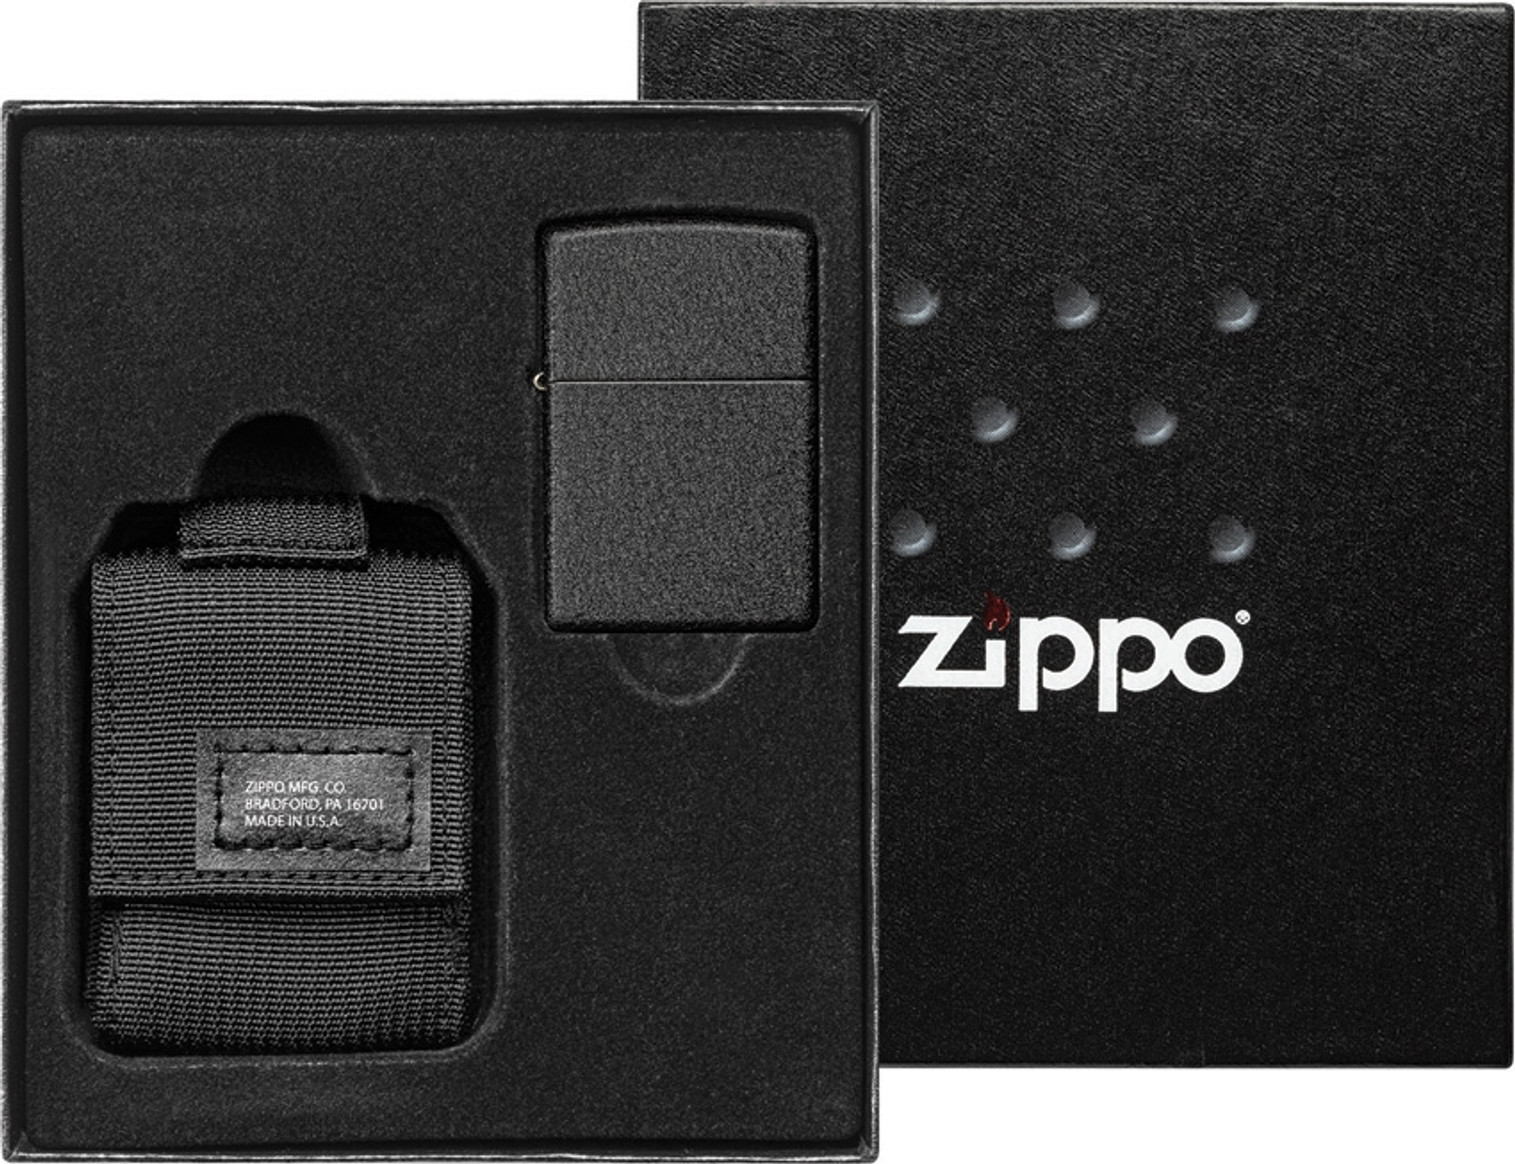 Zippo Black Crackle Lighter w/MOLLE Pouch - Black